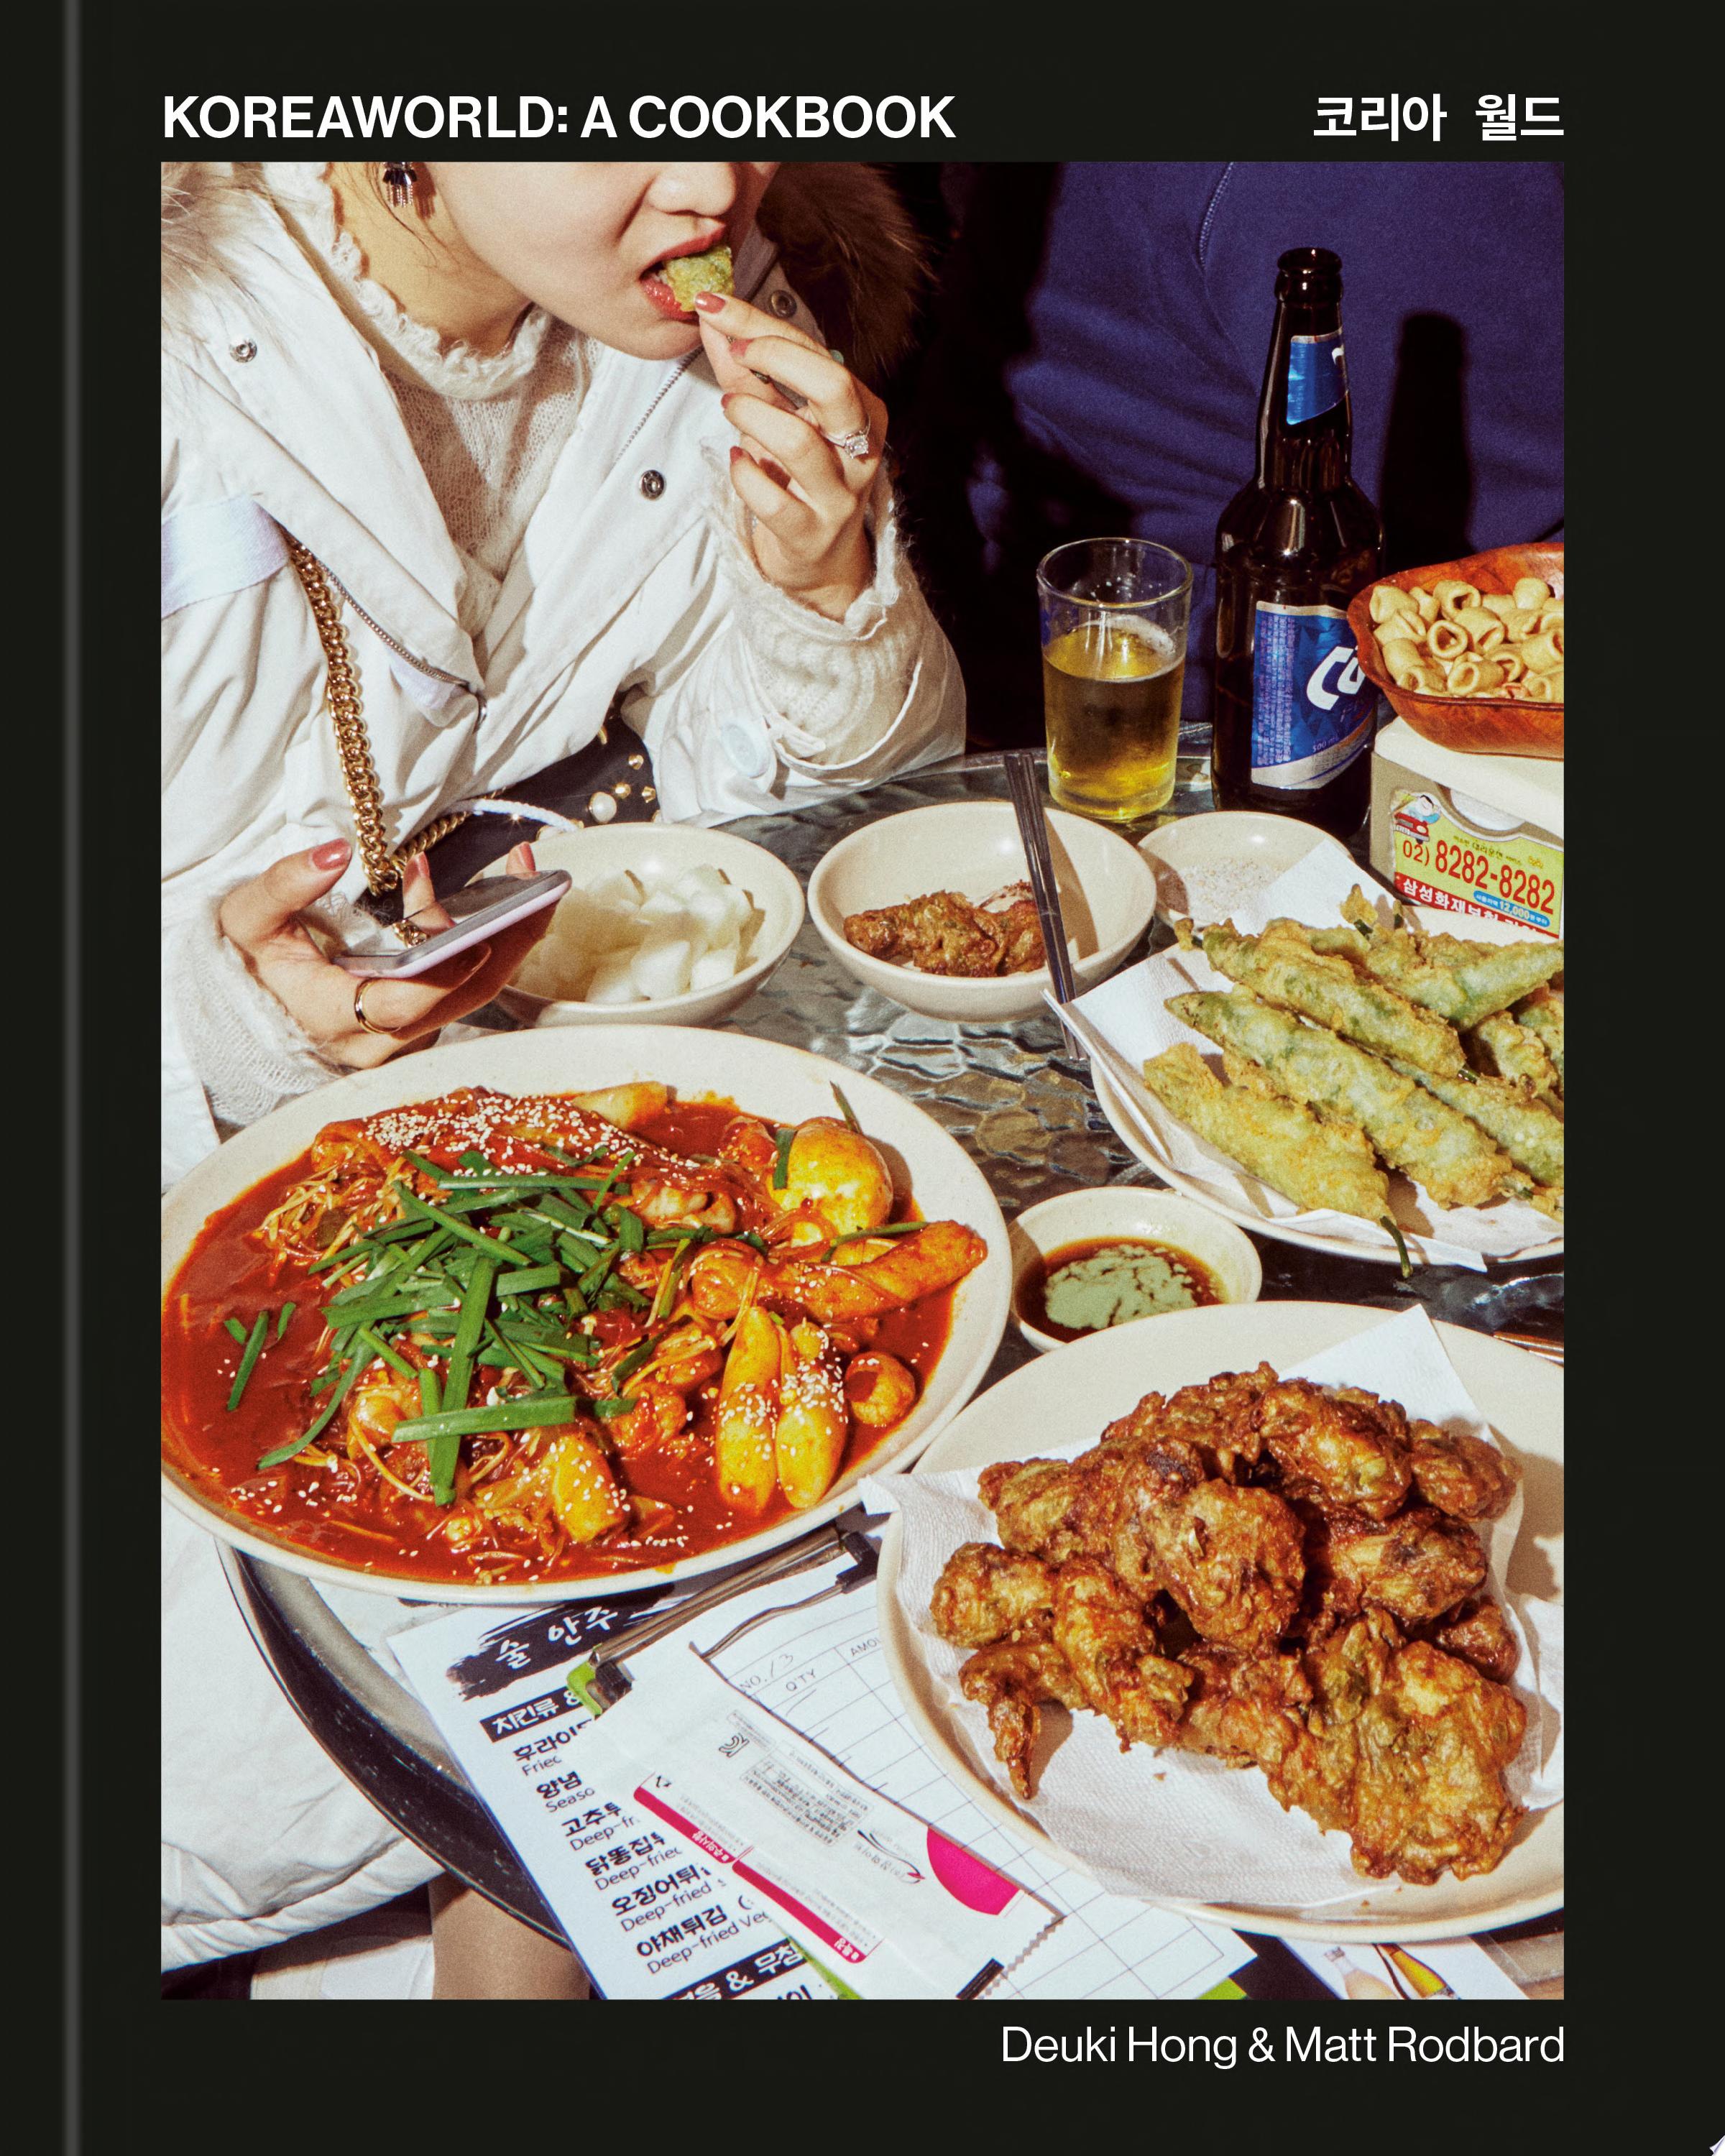 Image for "Koreaworld: A Cookbook"